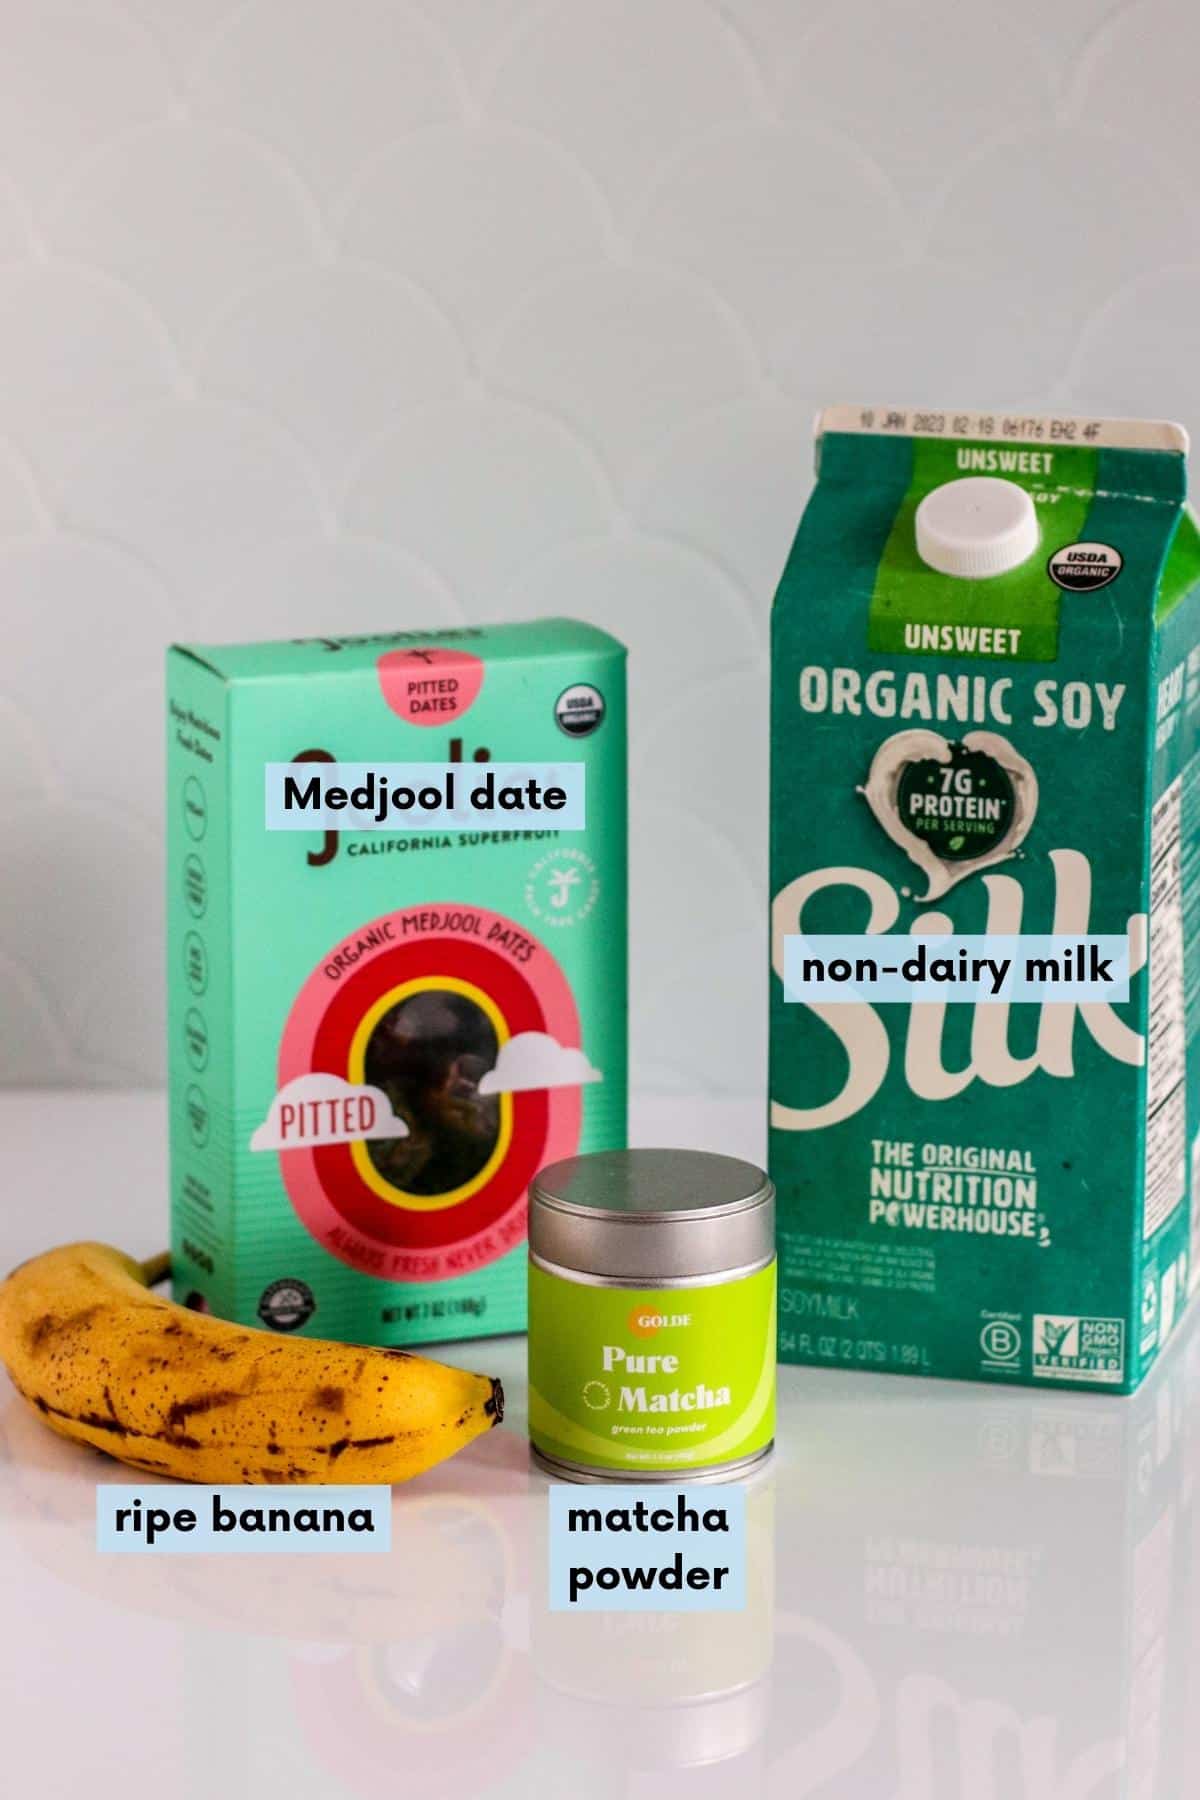 Ripe banana, box of Medjool dates, container of matcha powder, and a carton of soy milk.